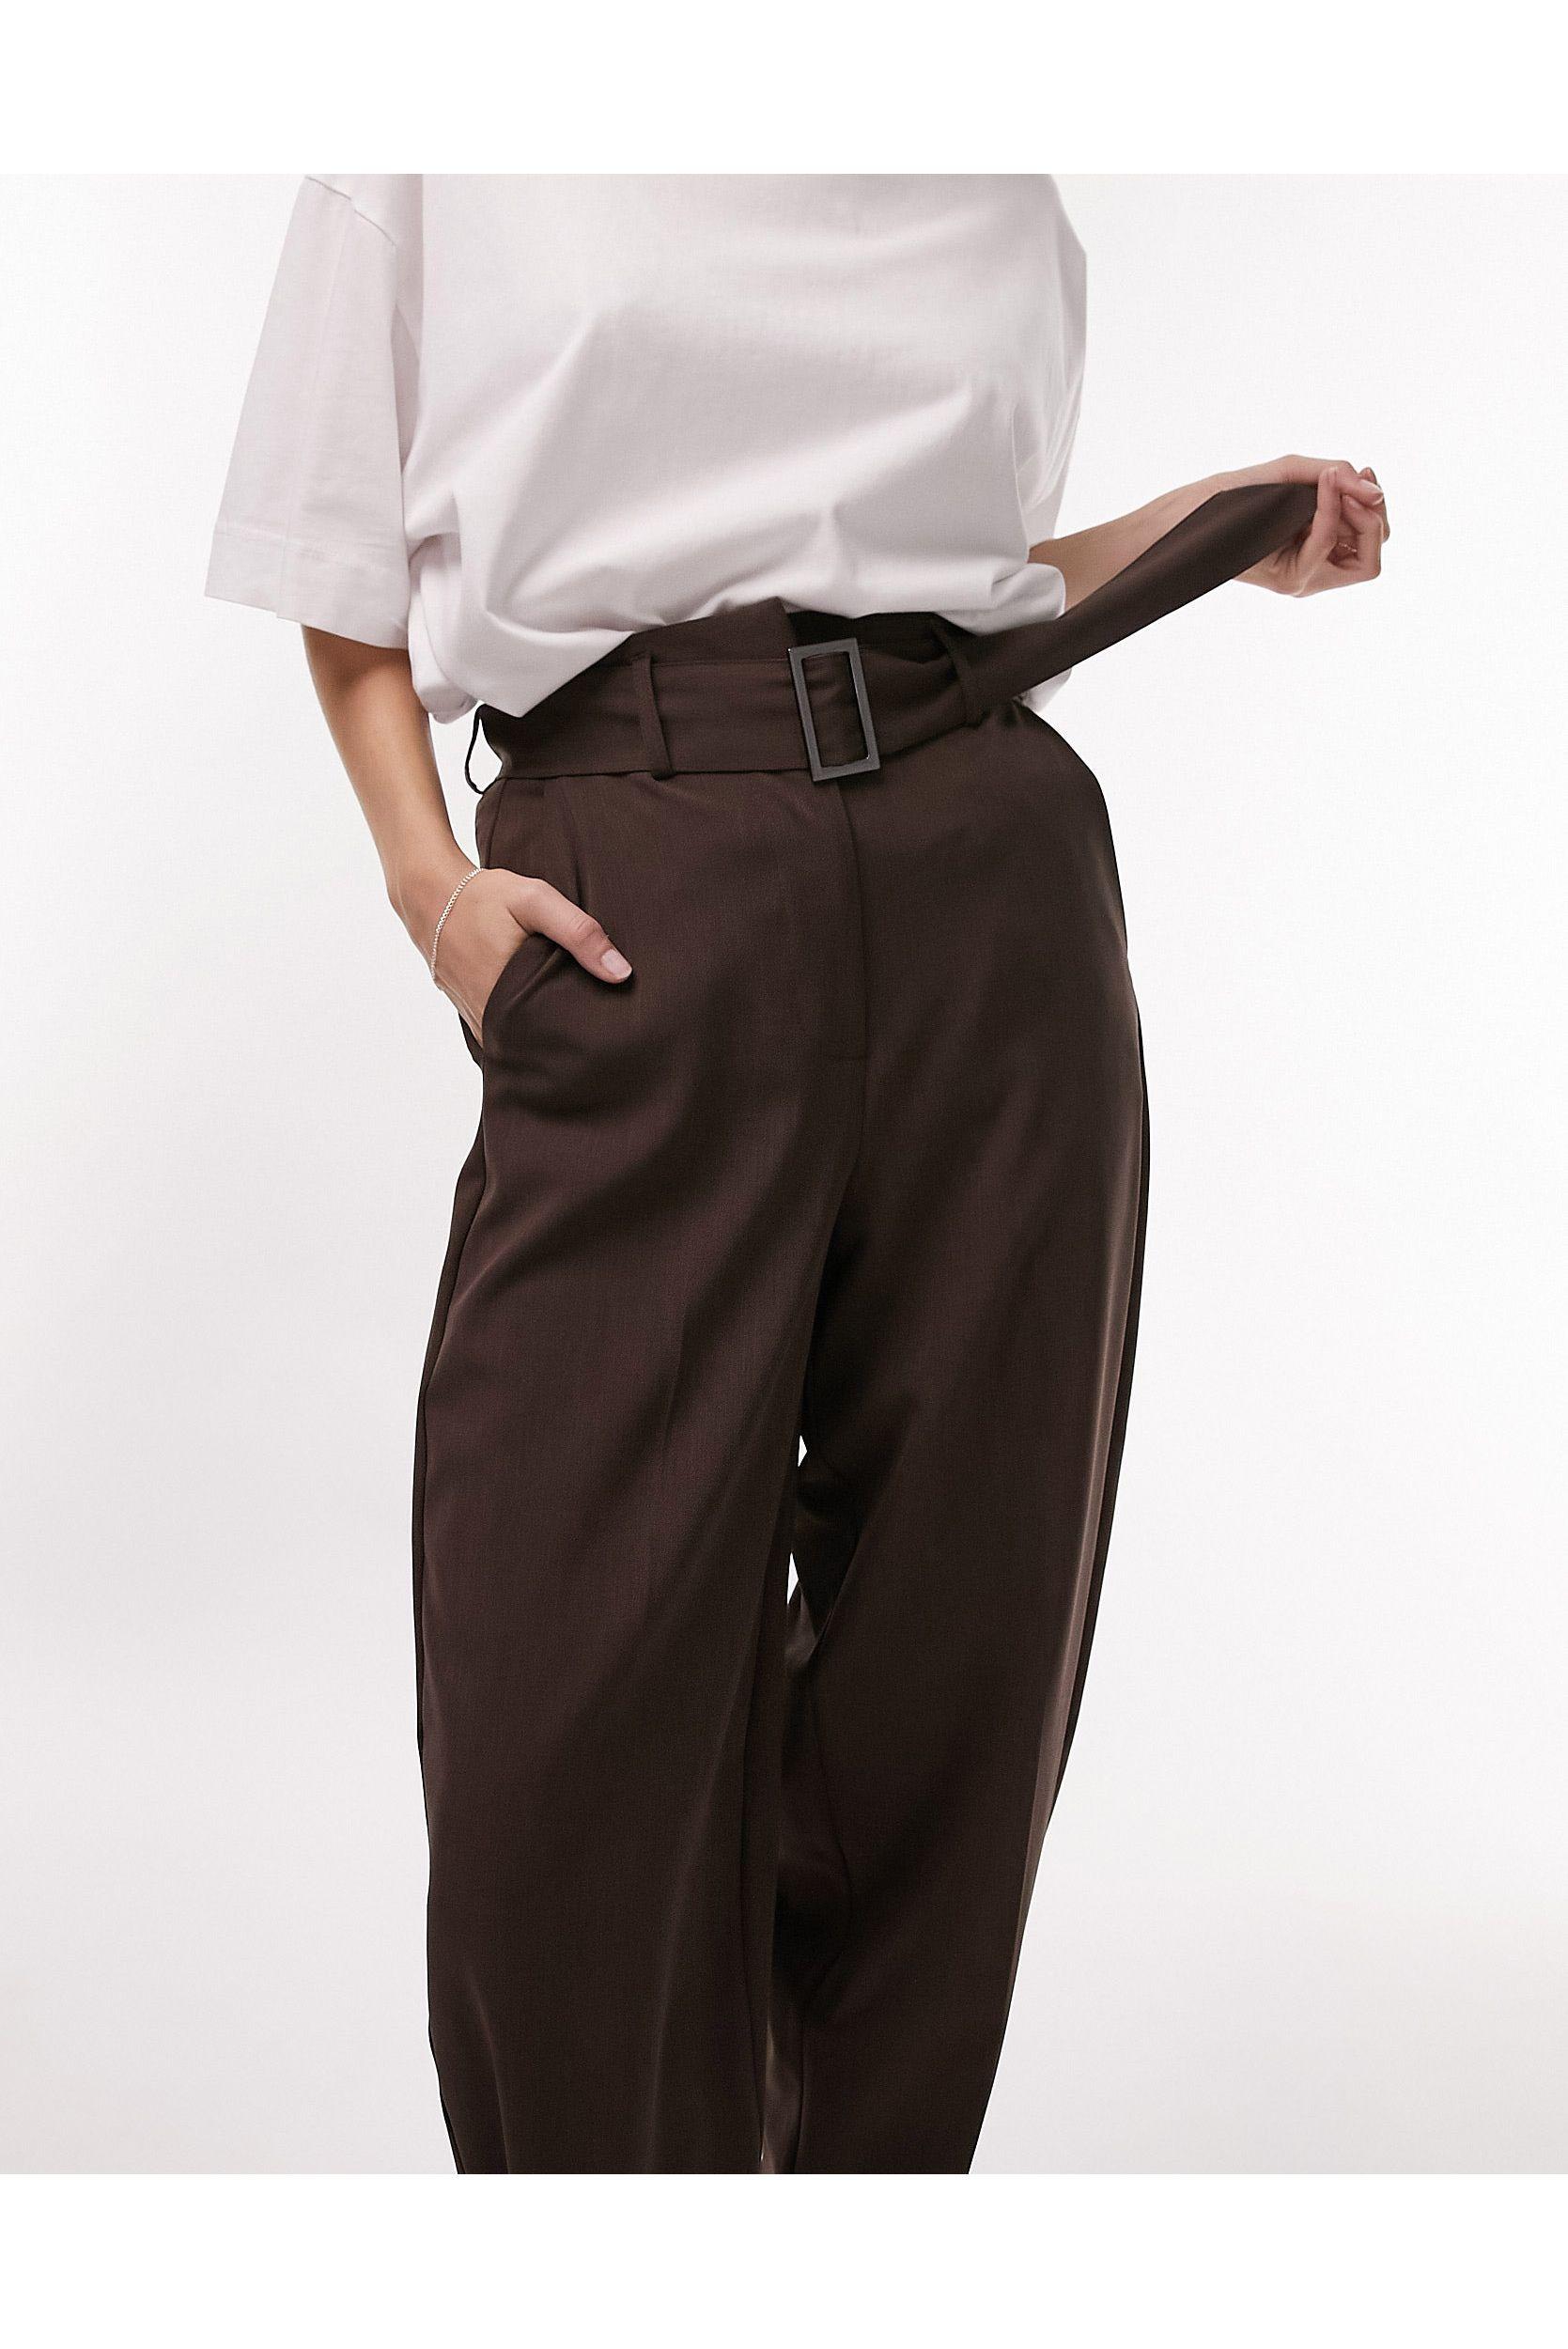 TOPSHOP Belted Peg Pants in Brown | Lyst